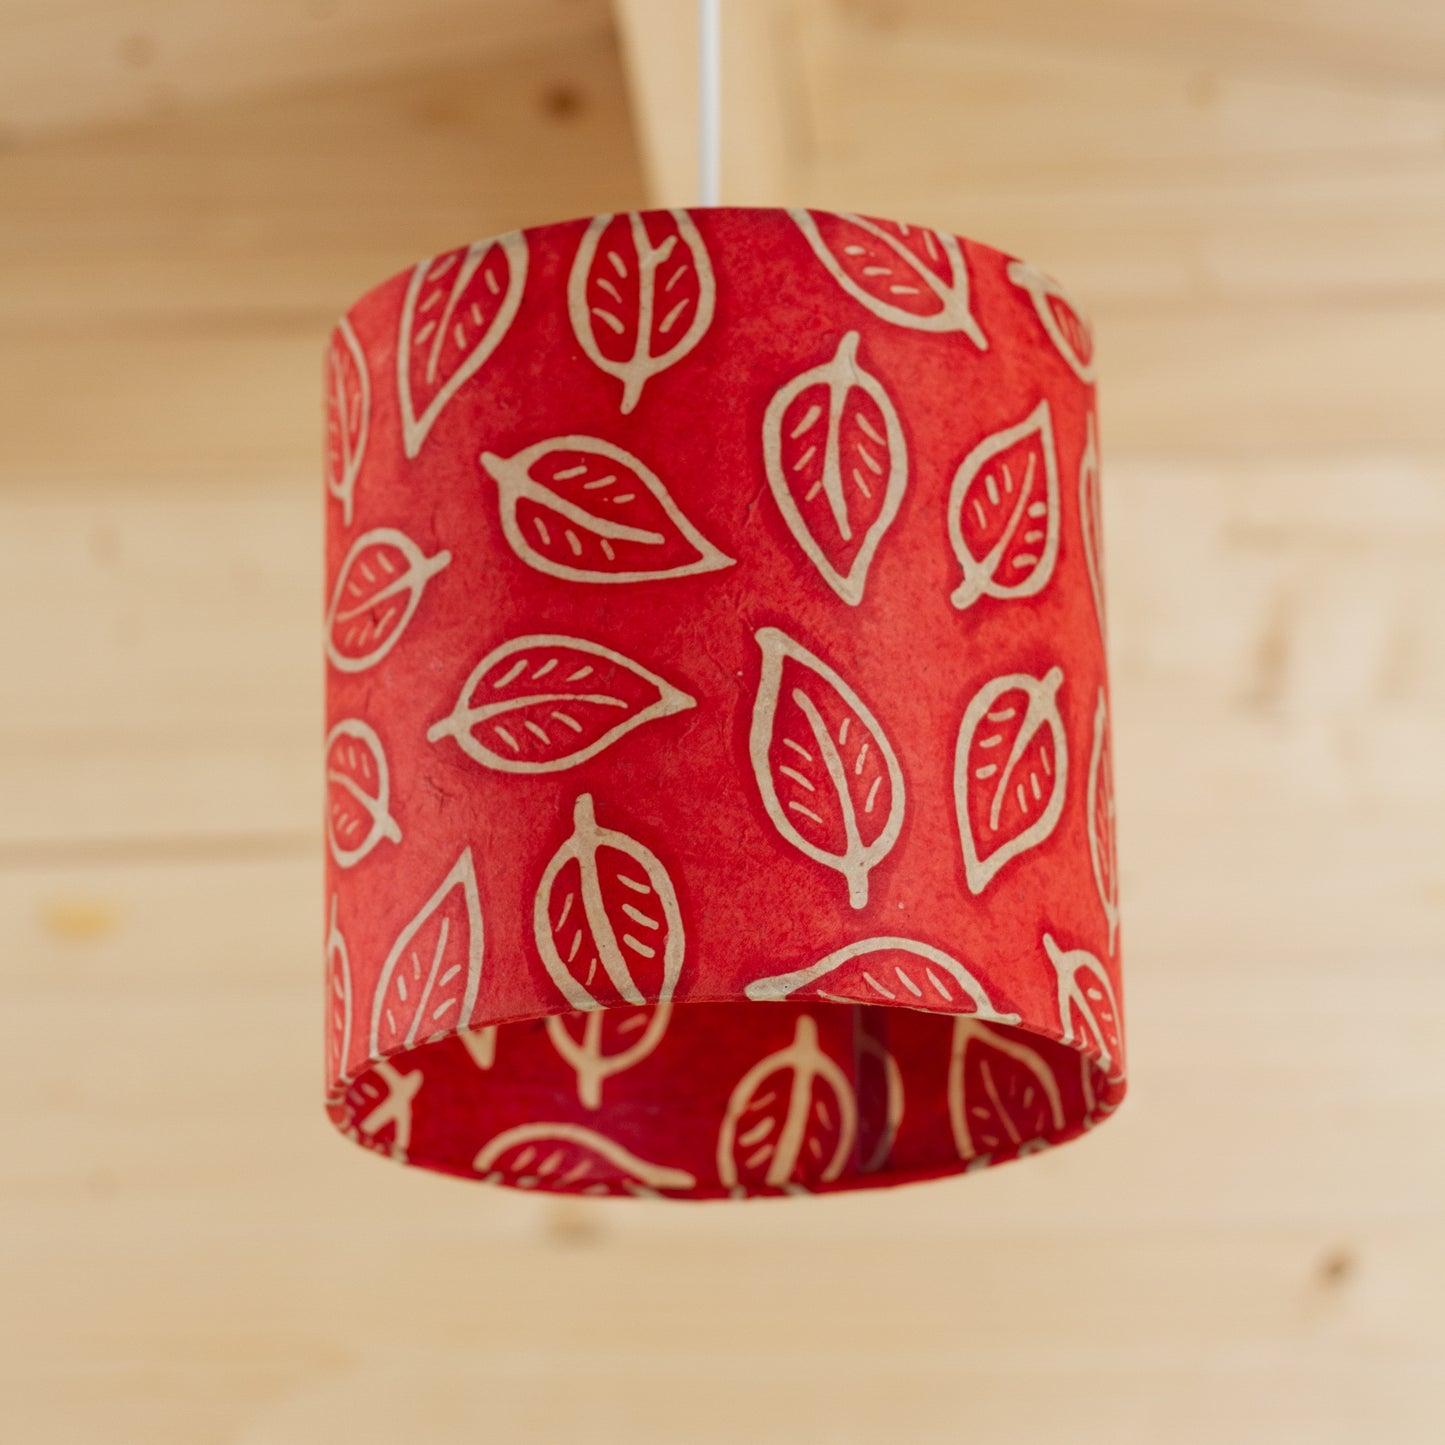 Drum Lamp Shade - P30 - Batik Leaf on Red, 20cm(d) x 20cm(h)